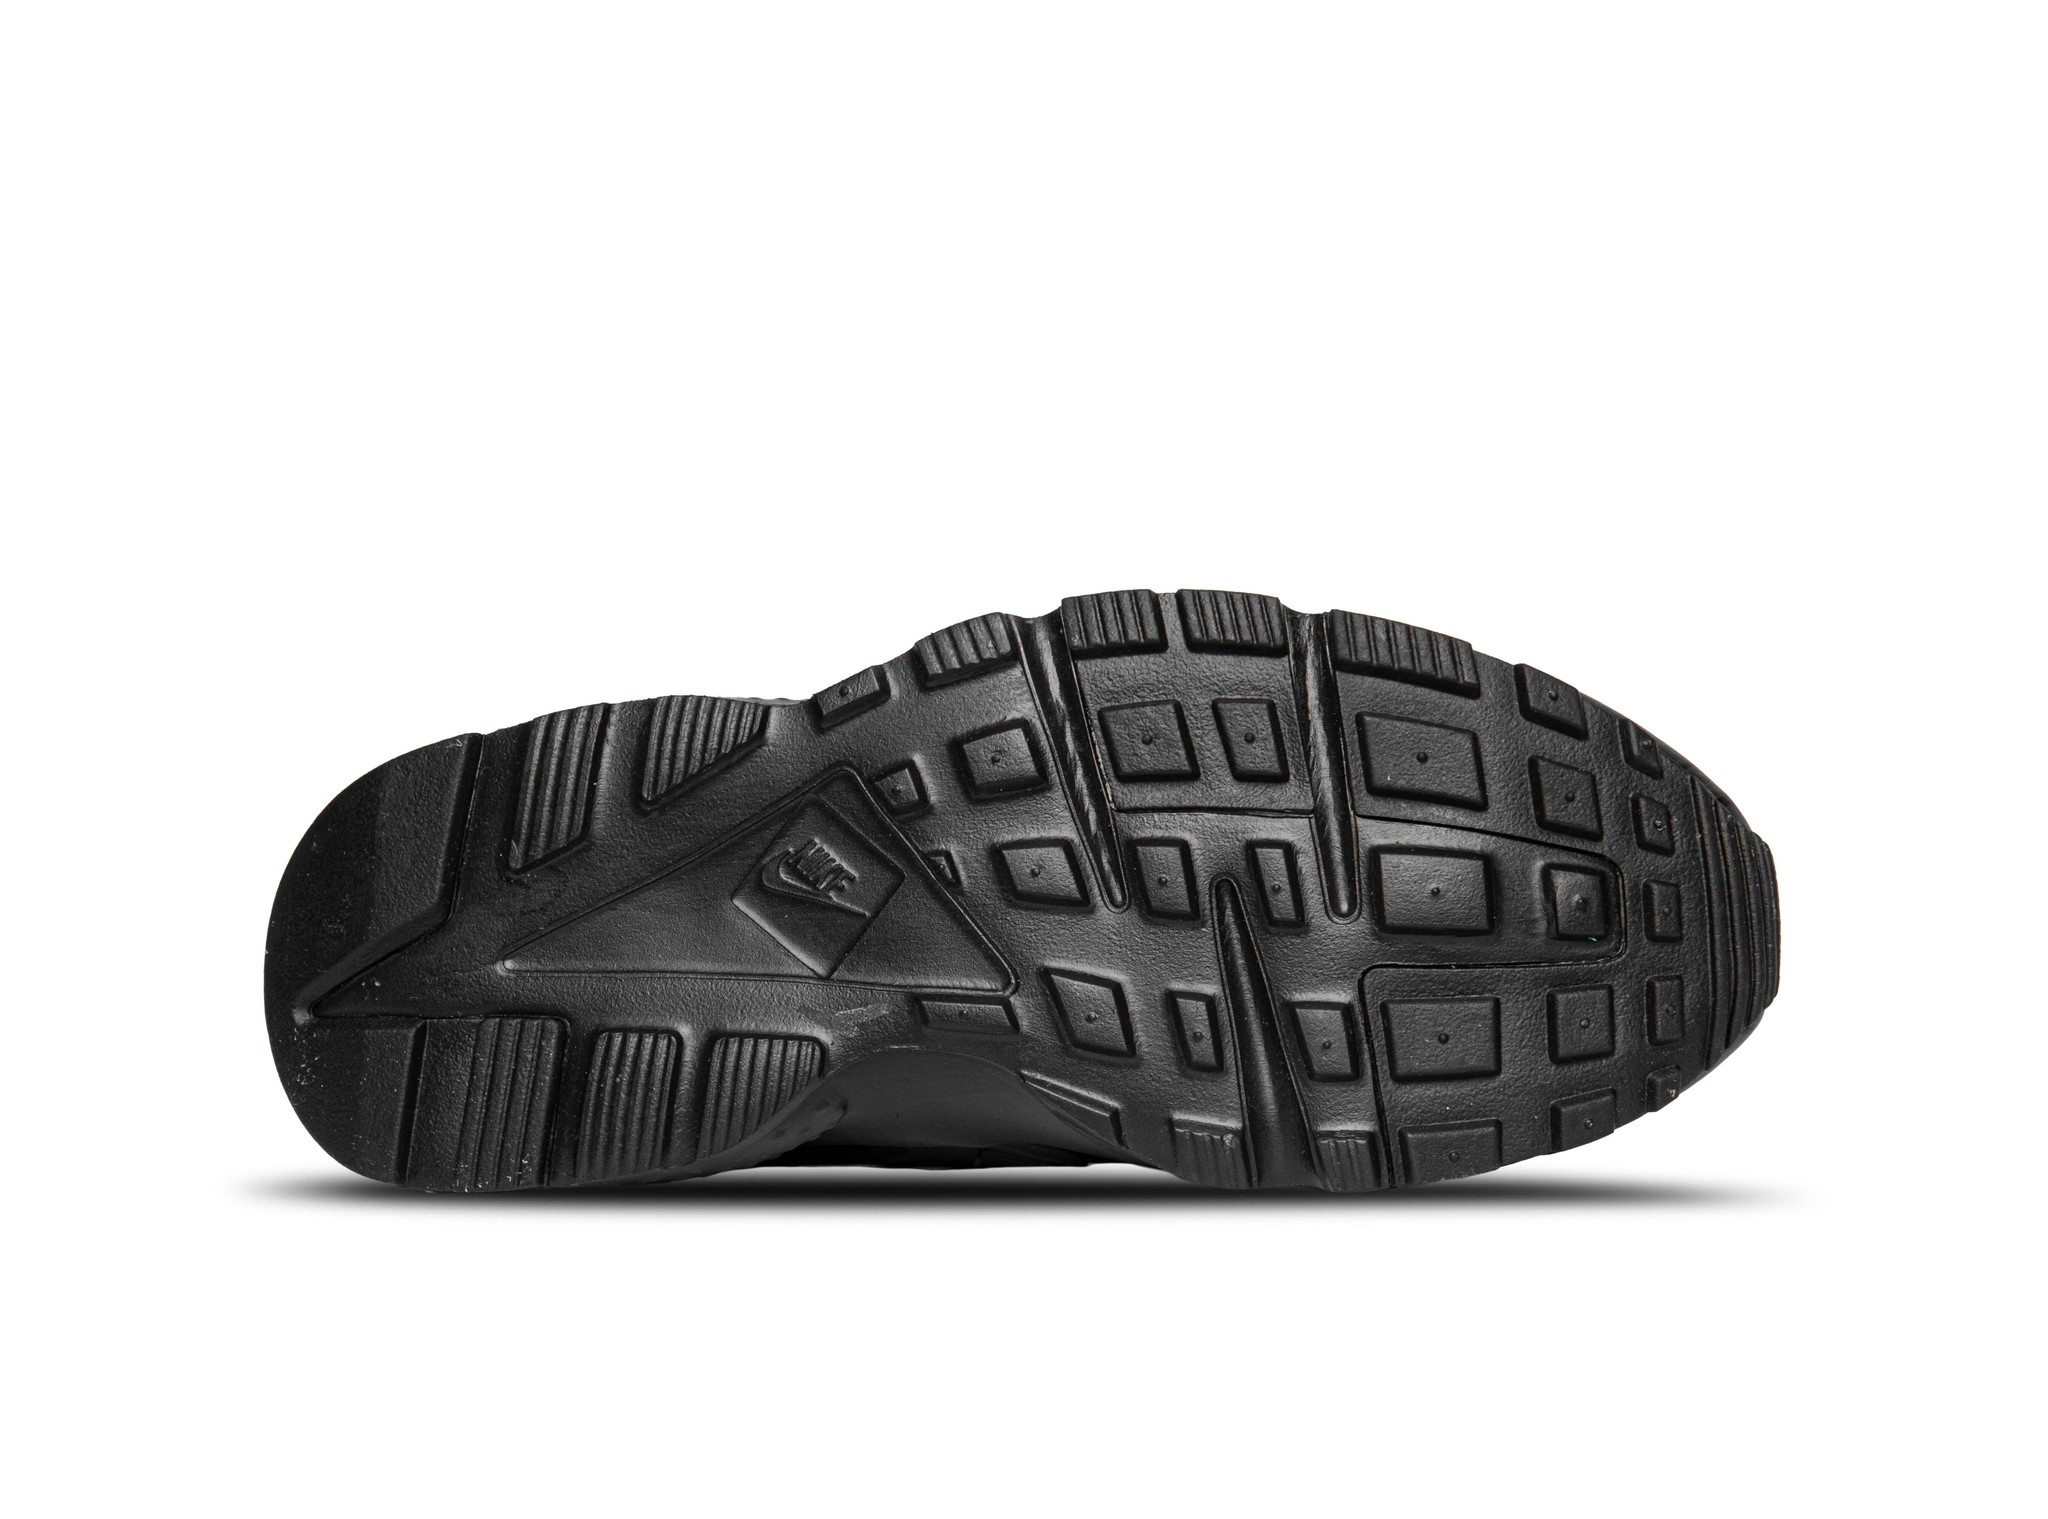 Pogo stick sprong Sjah praktijk Nike Huarache Run GS Black Black 654275 016 | Bruut Online Shop - Bruut